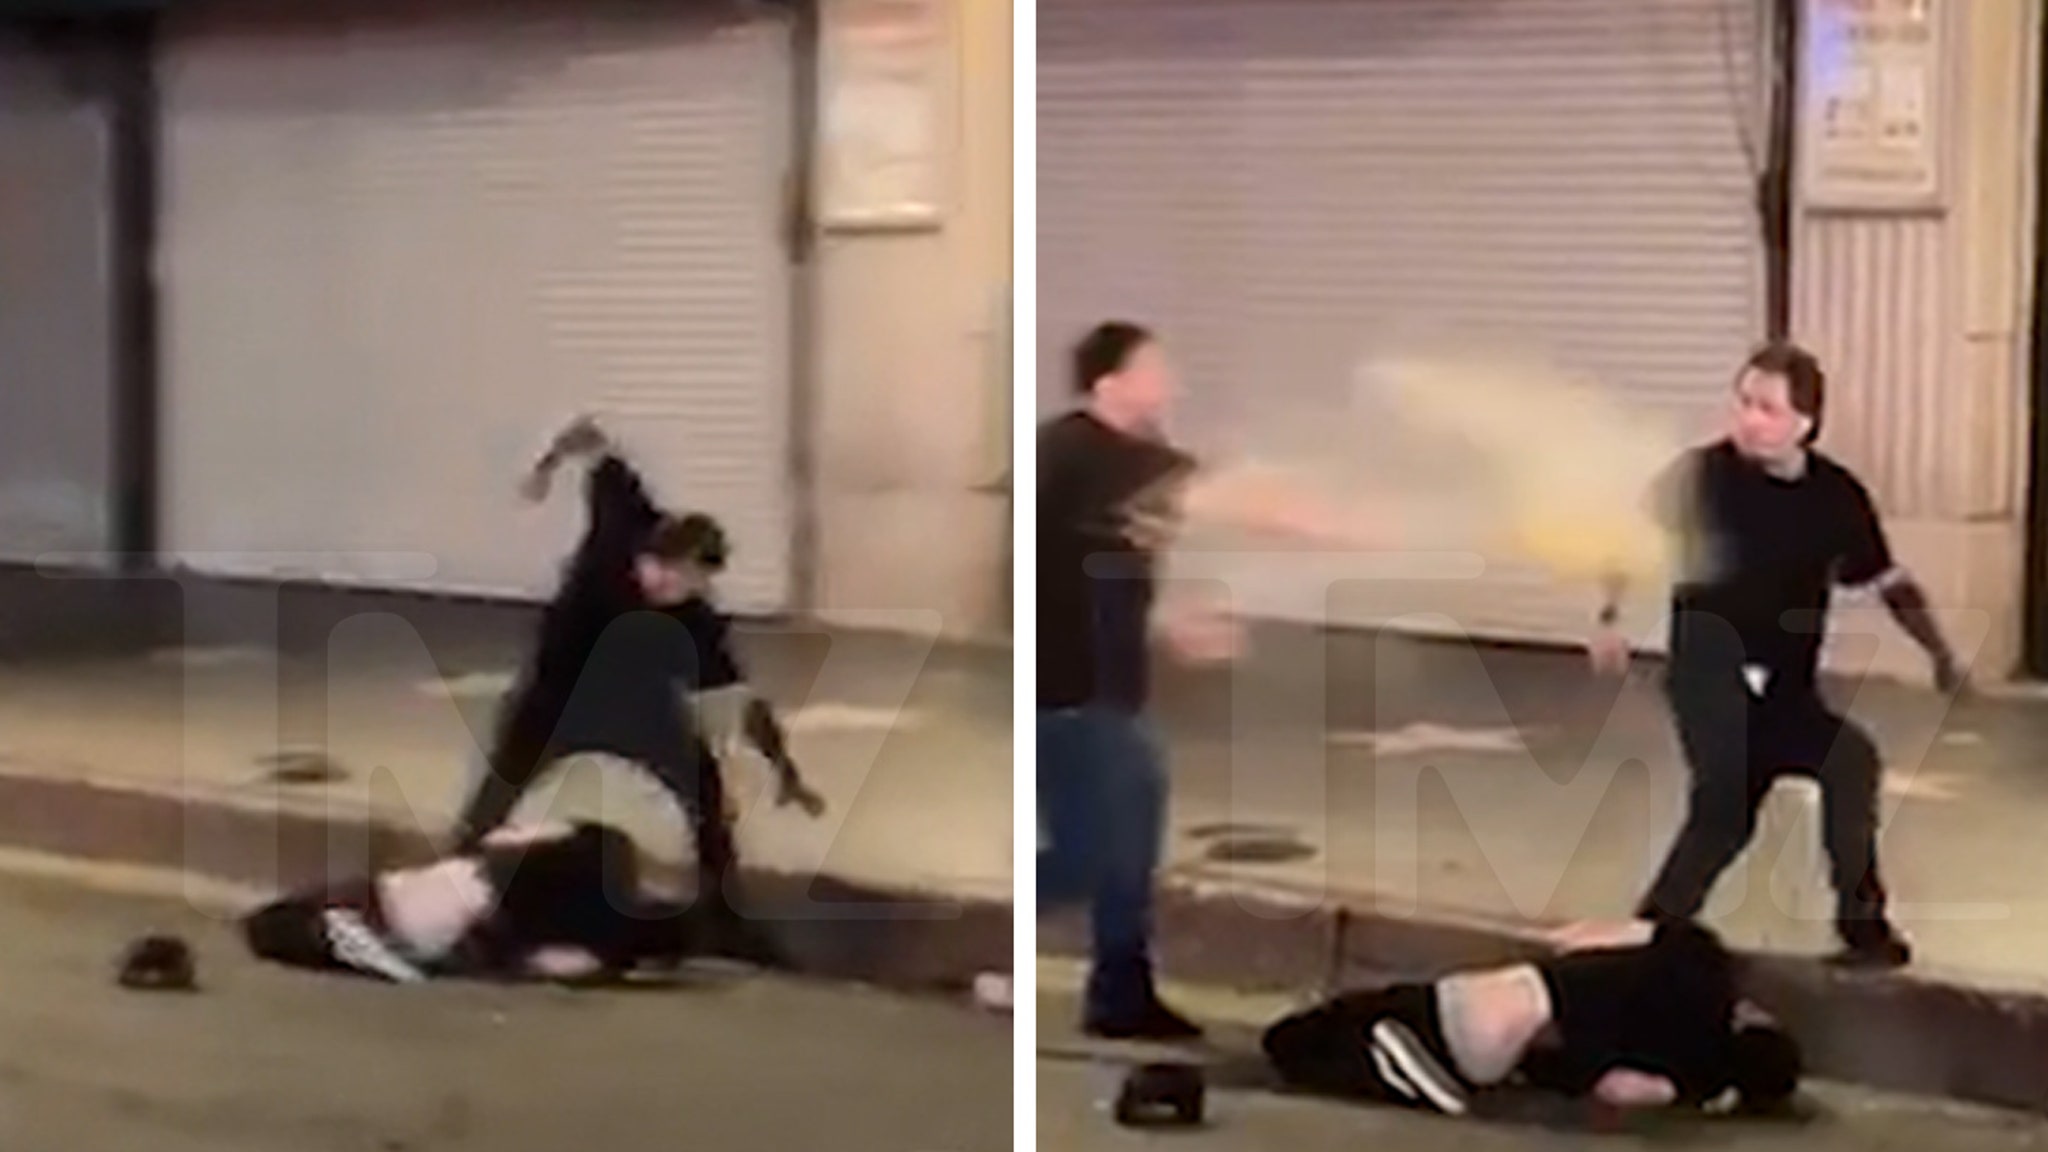 Video Captures Brutal Assault of Man in Streets of L.A., Leaving Him Senseless